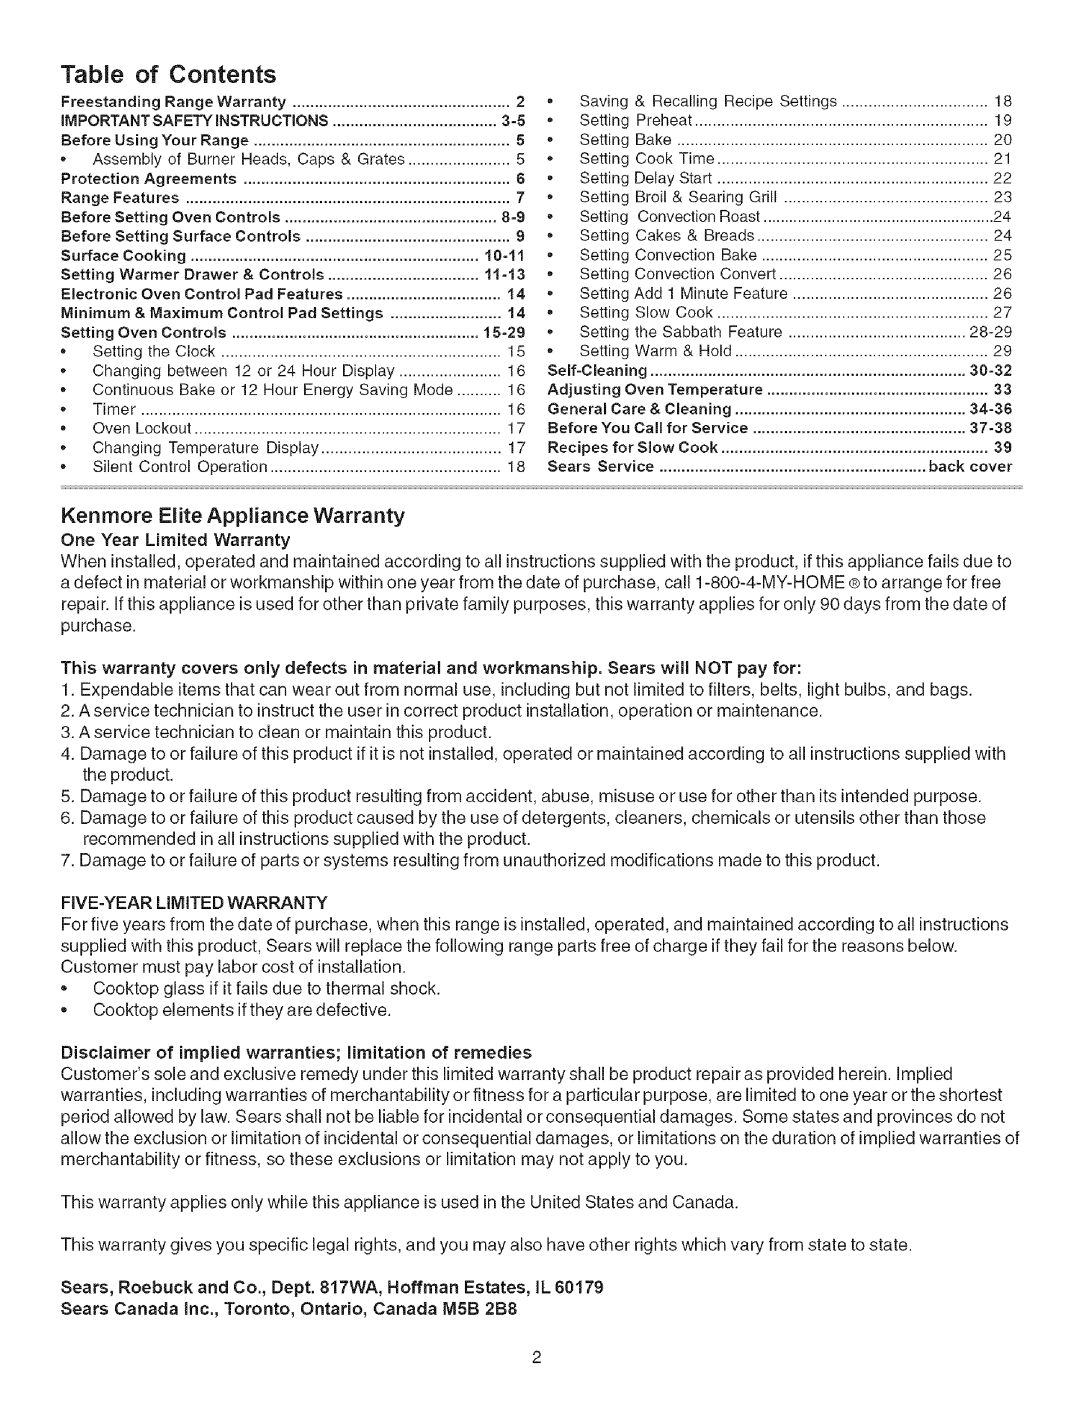 Kenmore 790.7946 manual Contents, Kenmore Elite Appliance Warranty, Before Using, Minimum & Maximum Control Pad Settings 